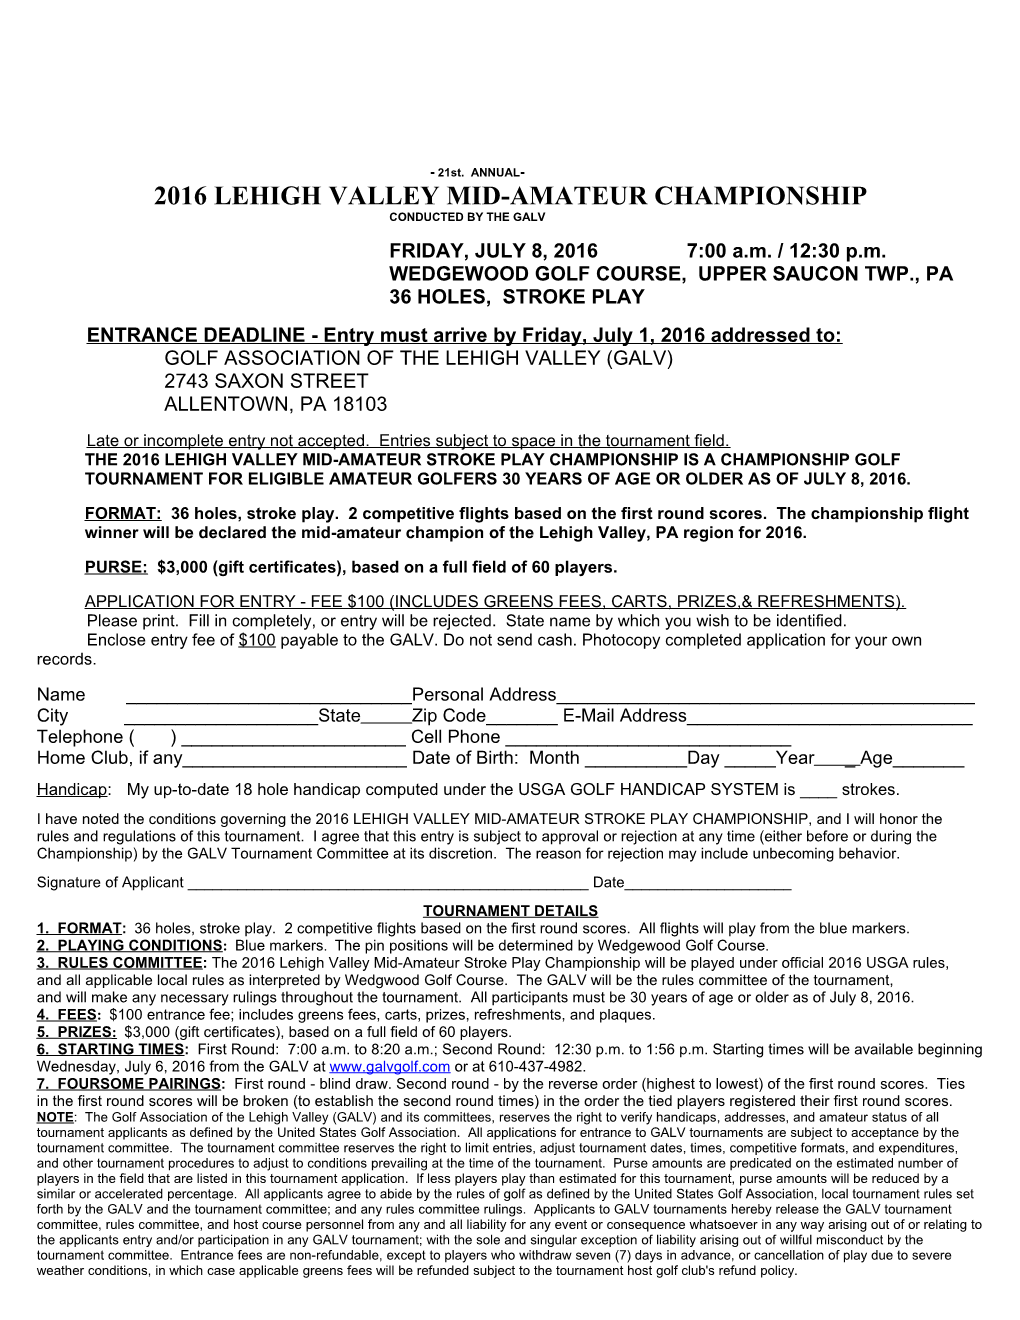 2016 Lehigh Valley Mid-Amateur Championship